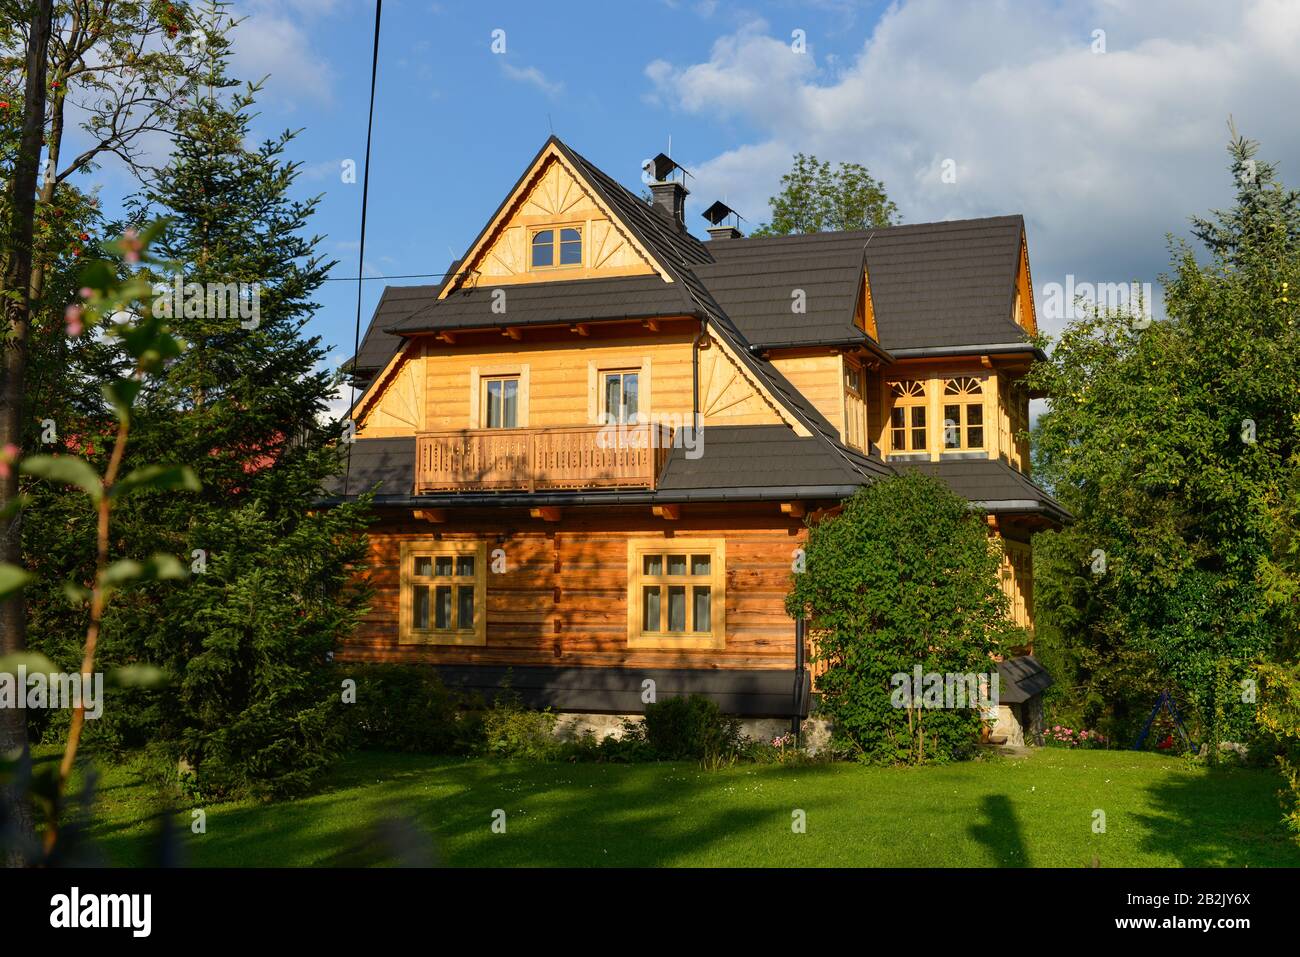 Traditionelles Holzhaus, Strazyska, Zakopane, Polen Foto Stock